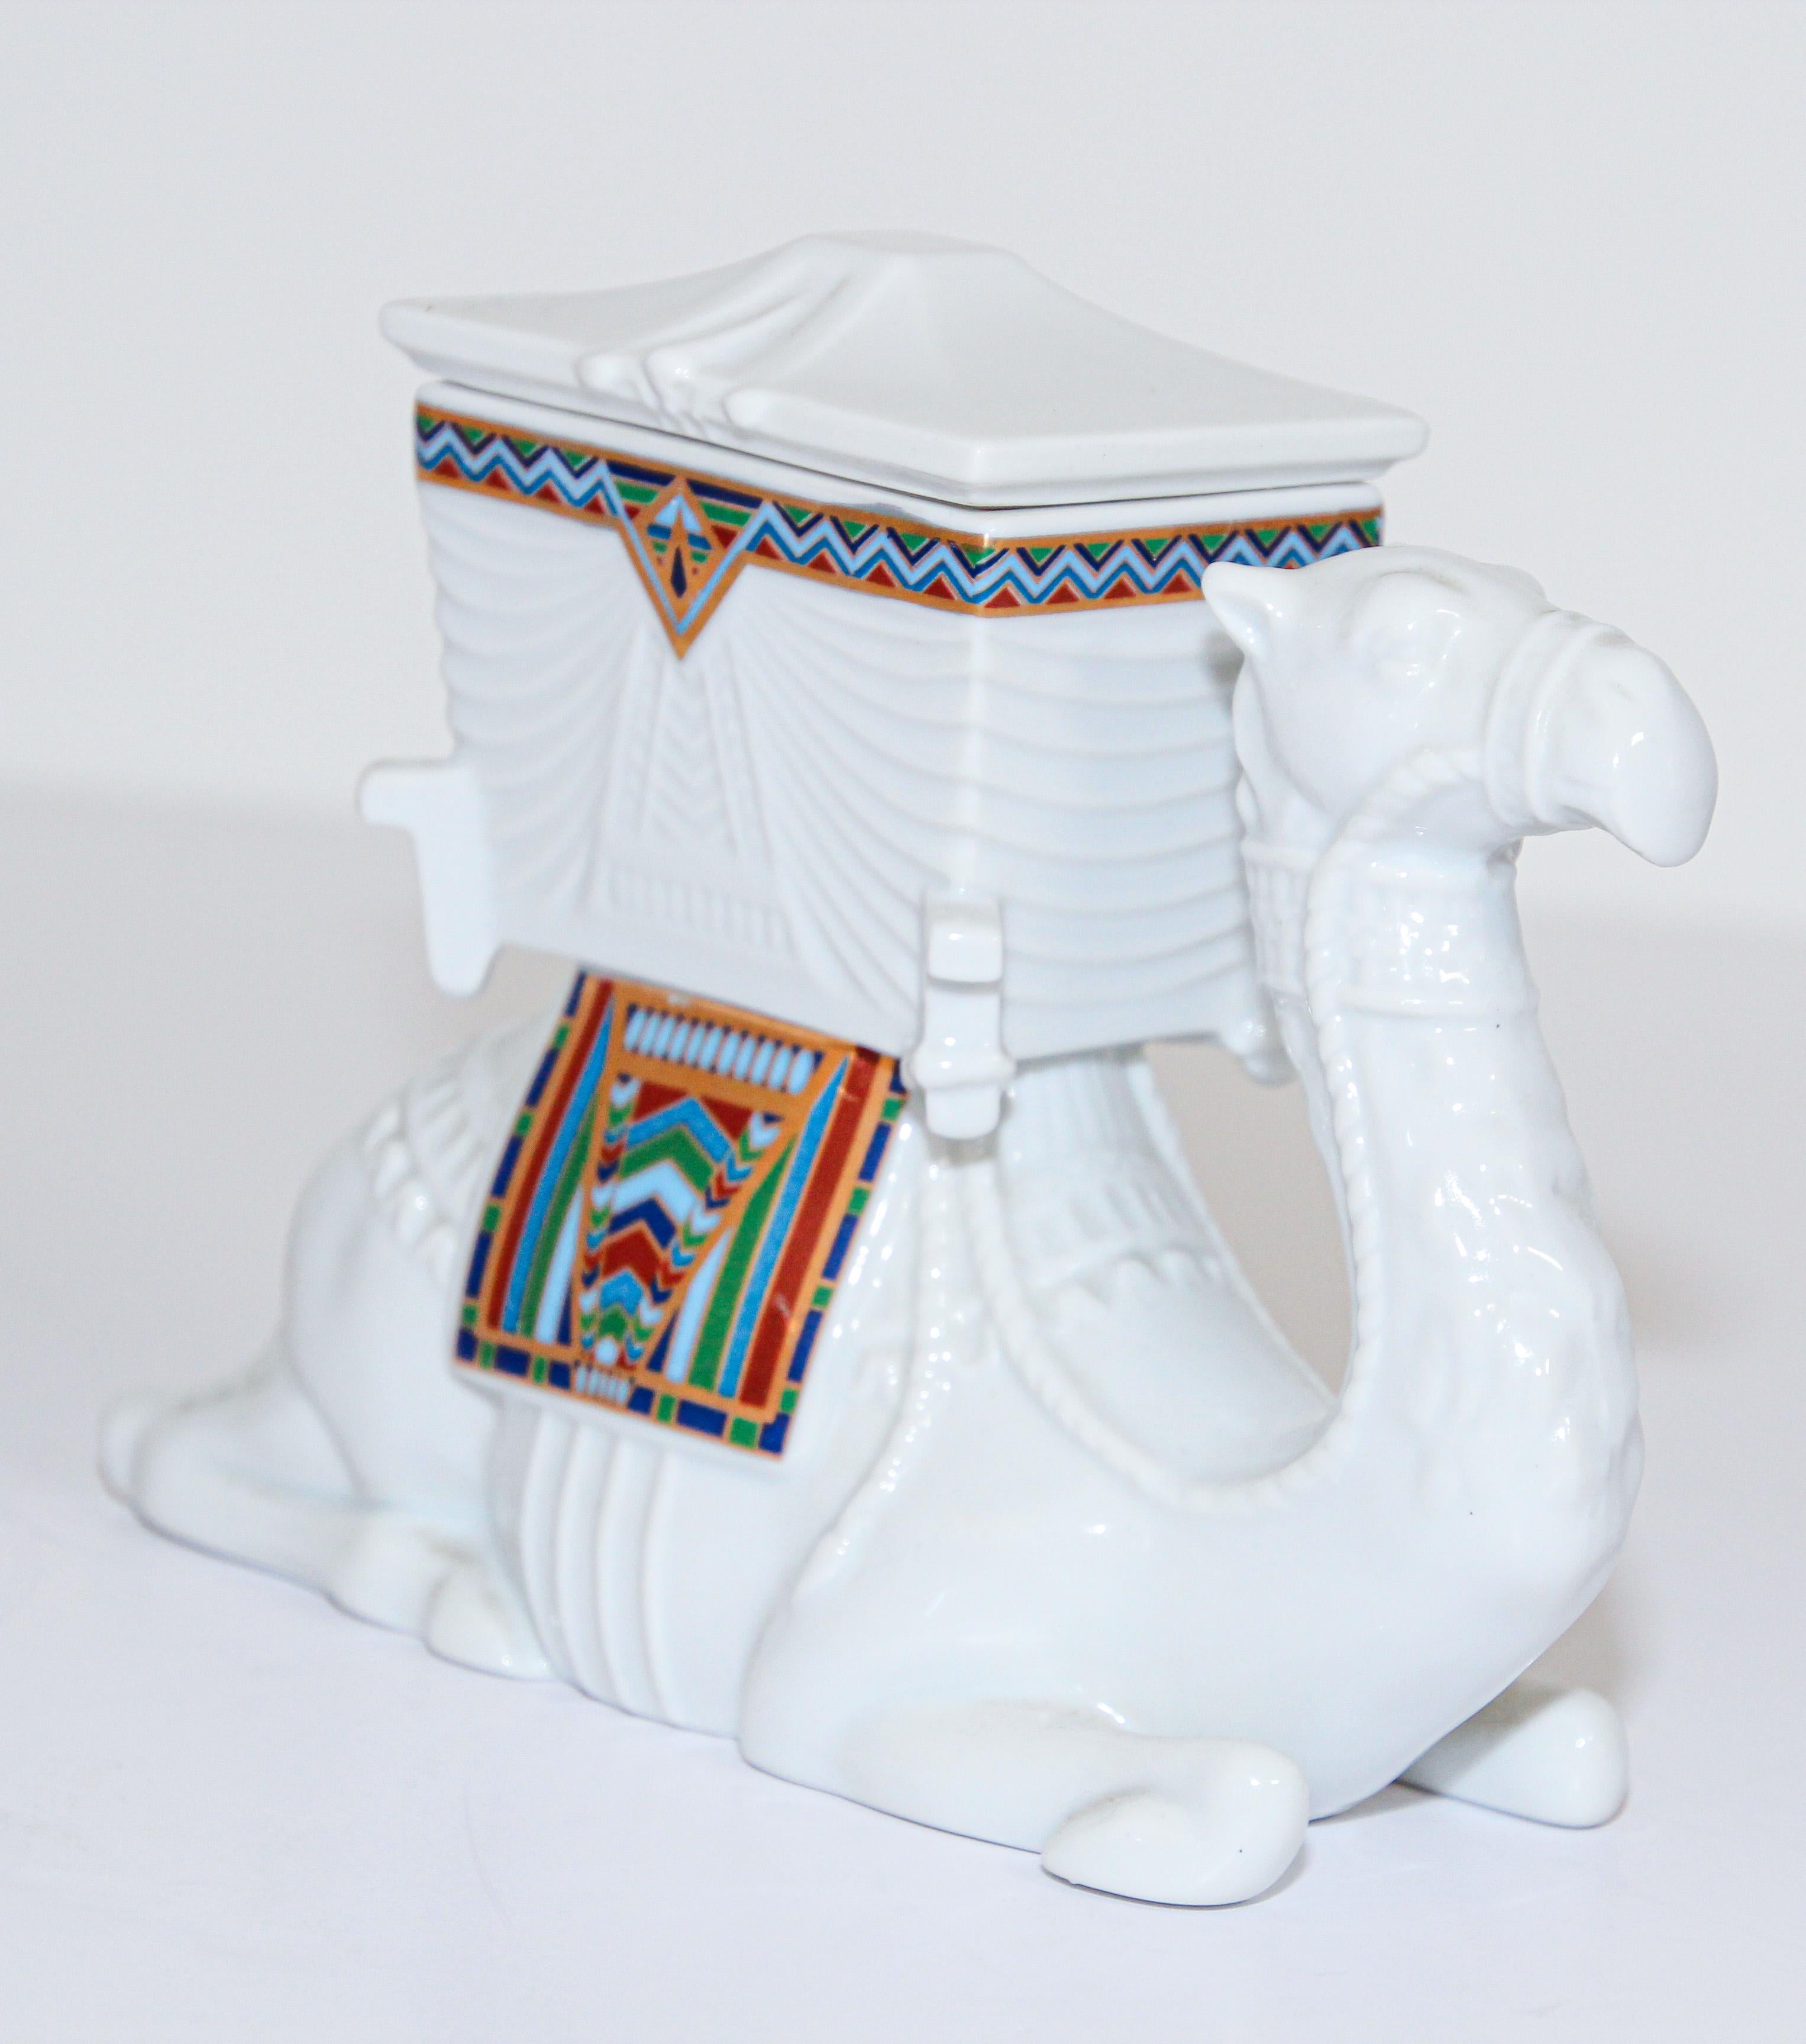 American Treasures of the Pharaohs Porcelain Royal Camel by Elizabeth Arden